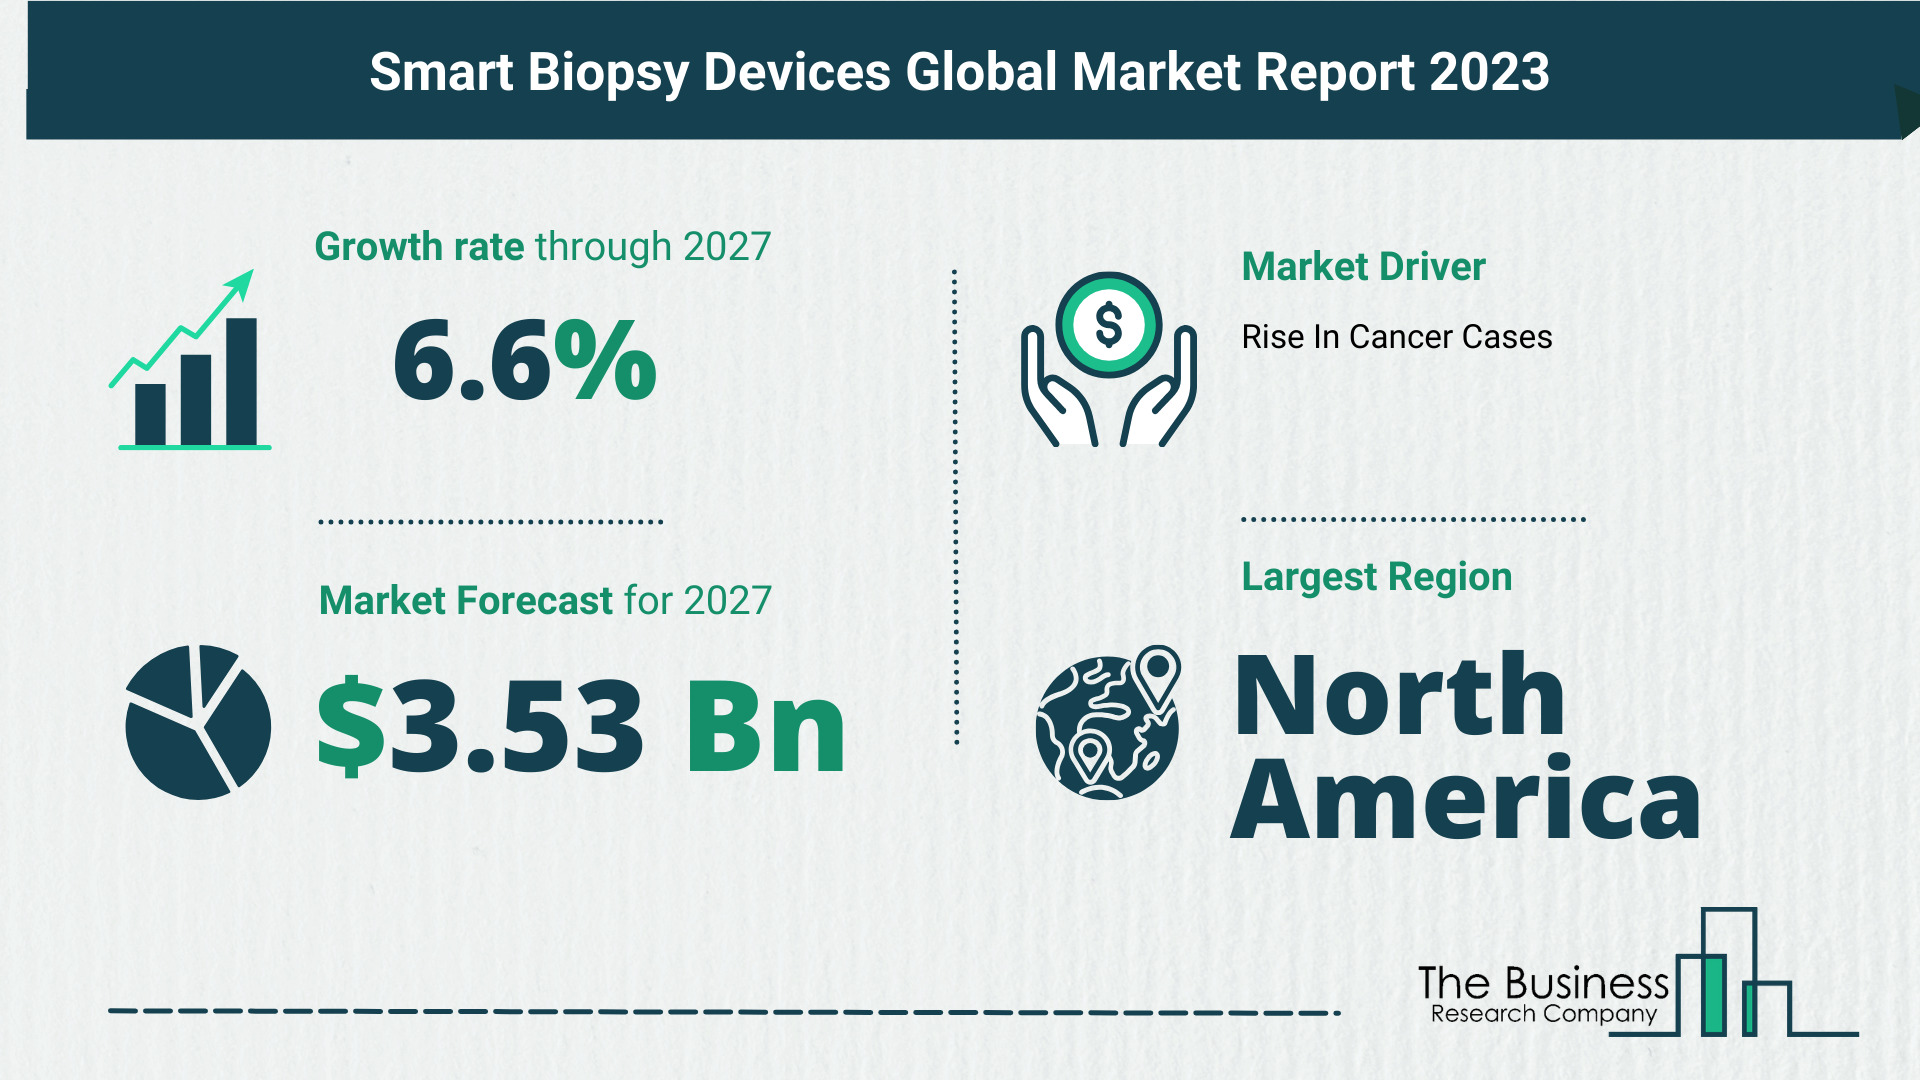 Smart Biopsy Devices Market Forecast 2023: Forecast Market Size, Drivers And Key Segments